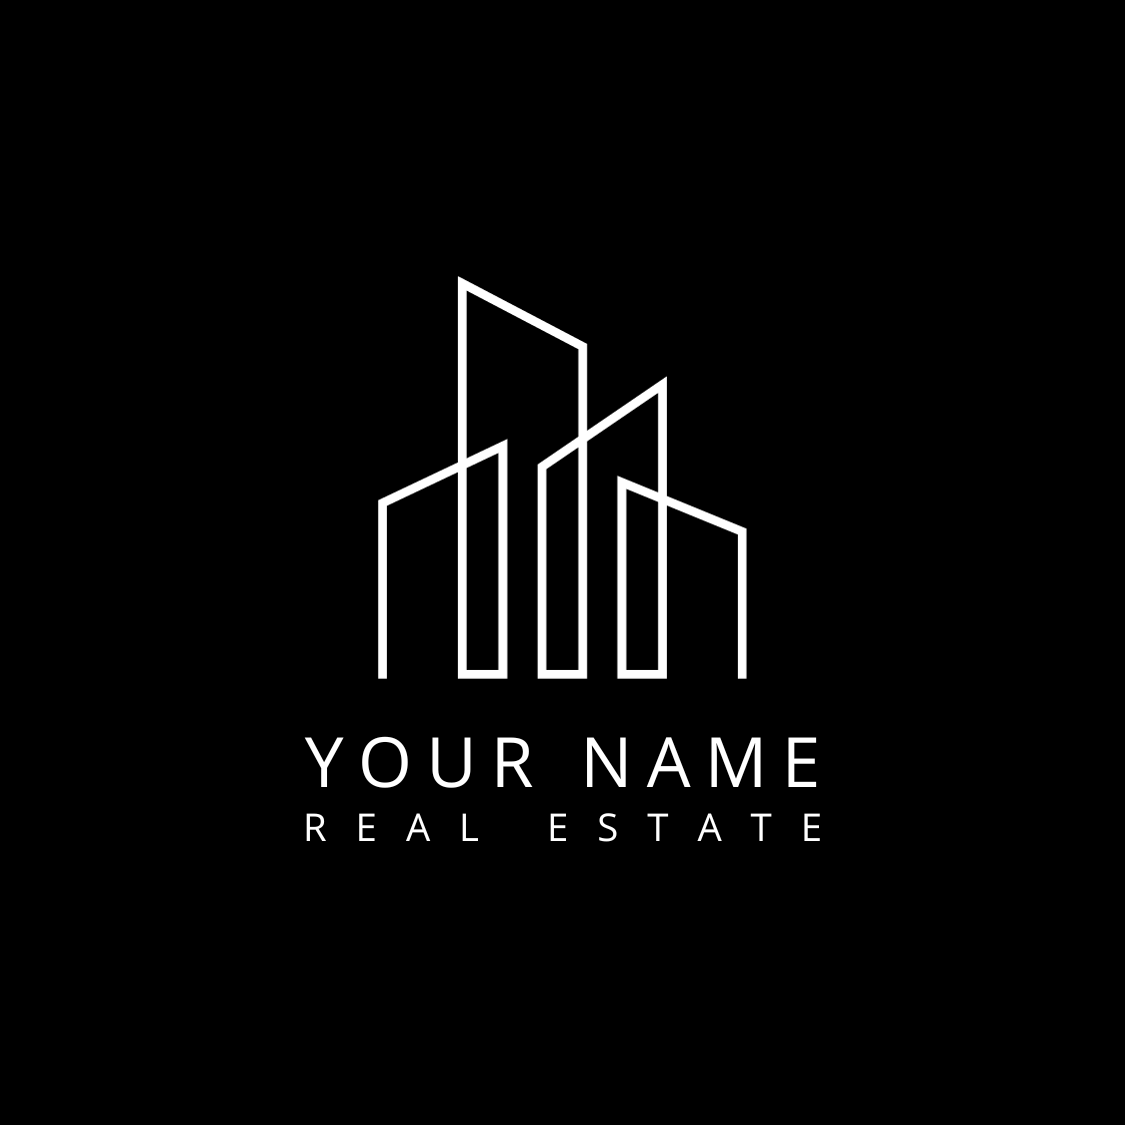 monoline real estate logo 1 981